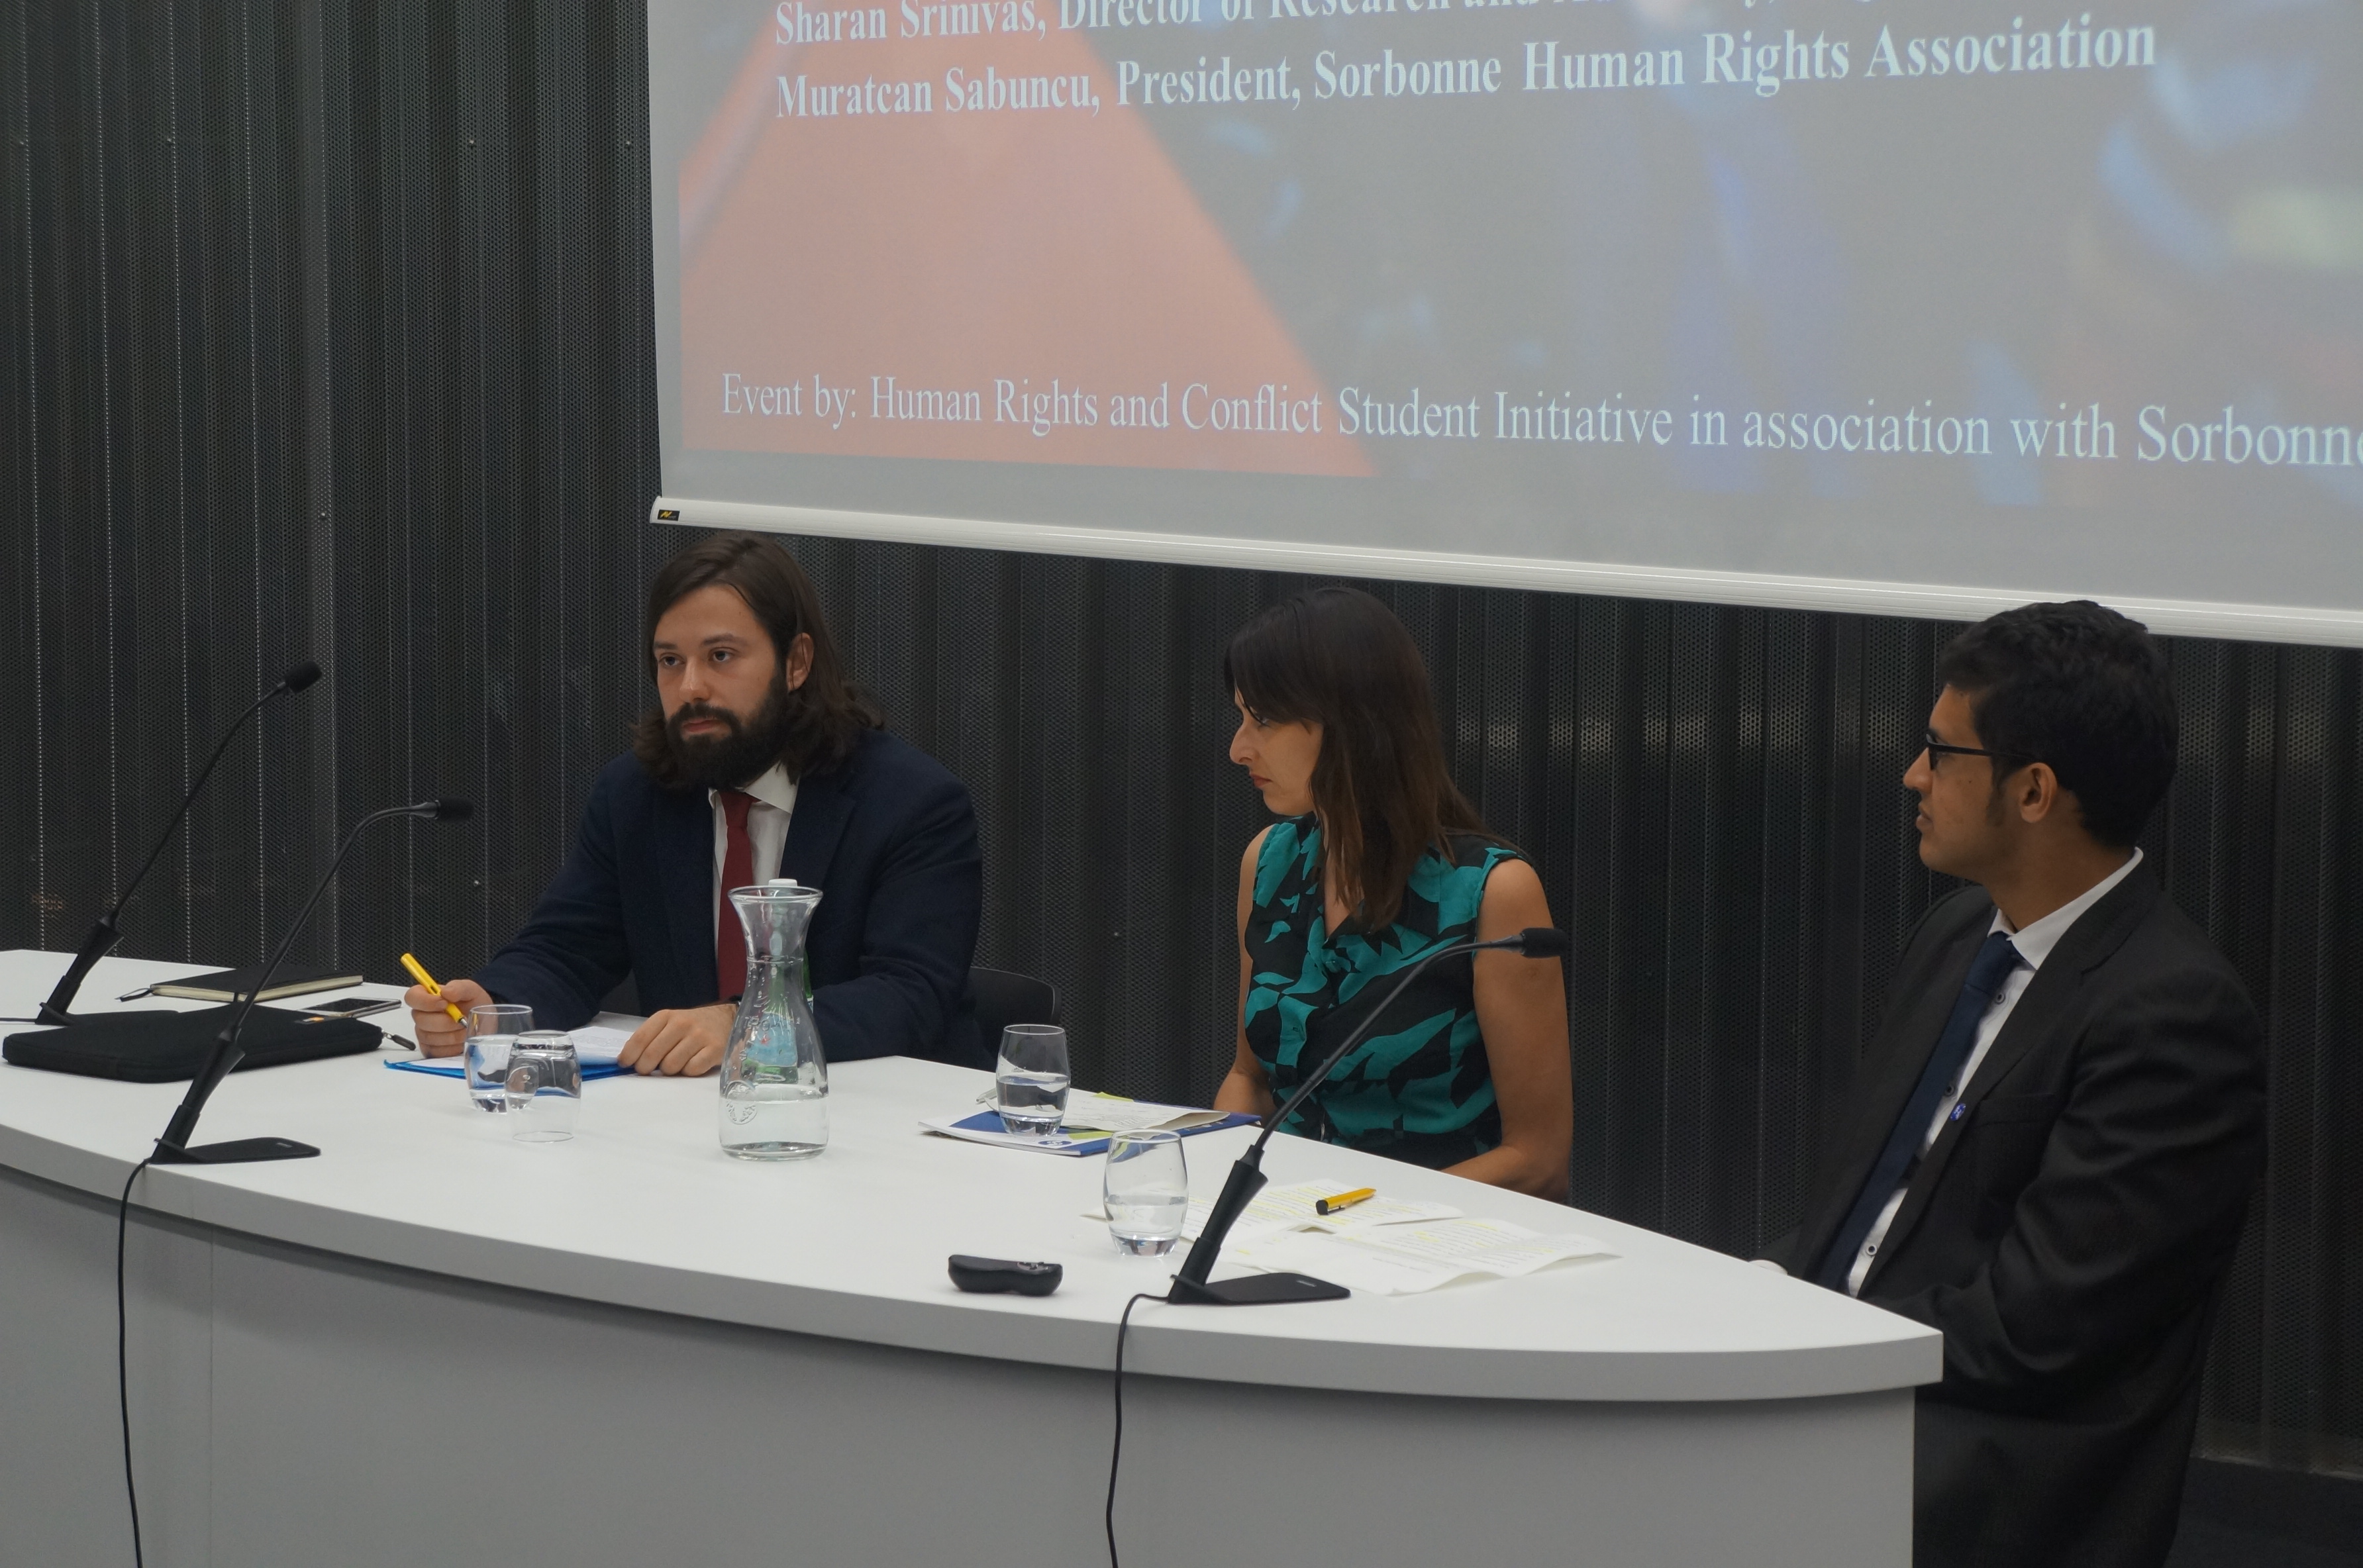 L-R: Muratcan Sabuncu; Nadia Boehlen, Amnesty International - Switzerland, Sharan Srivinas, Right Livelihood Award Foundation